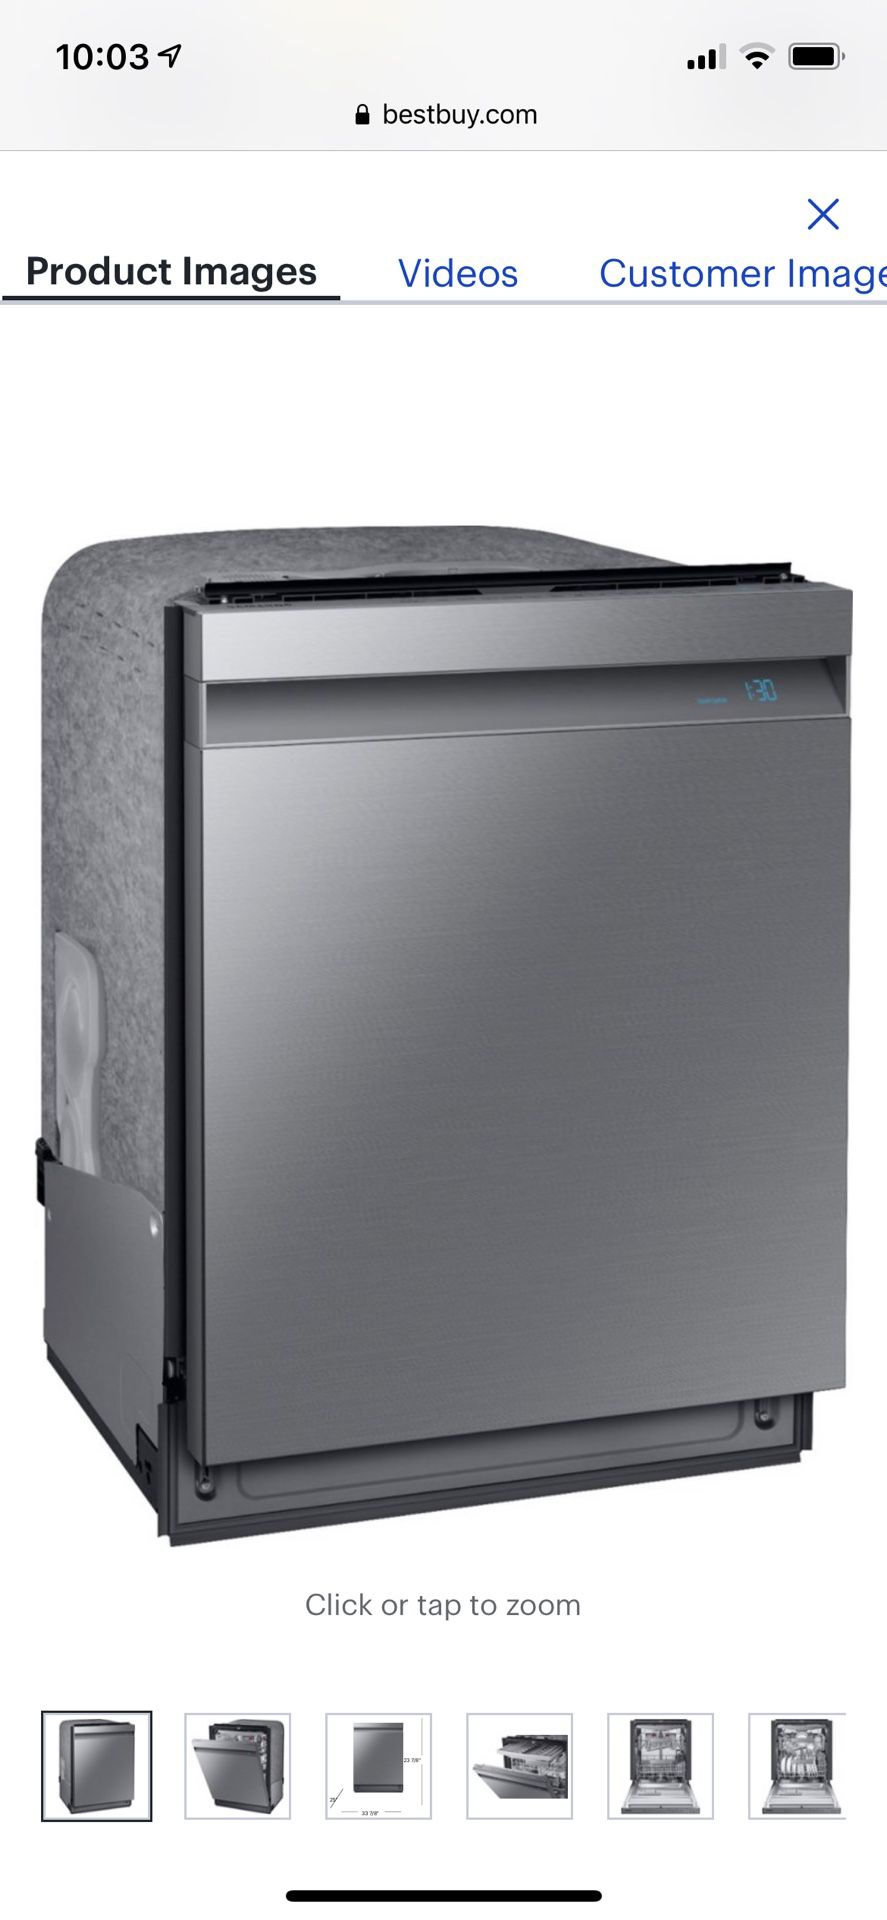 Samsung Stainless Steel Dishwasher - Brand New - DW80R9950US